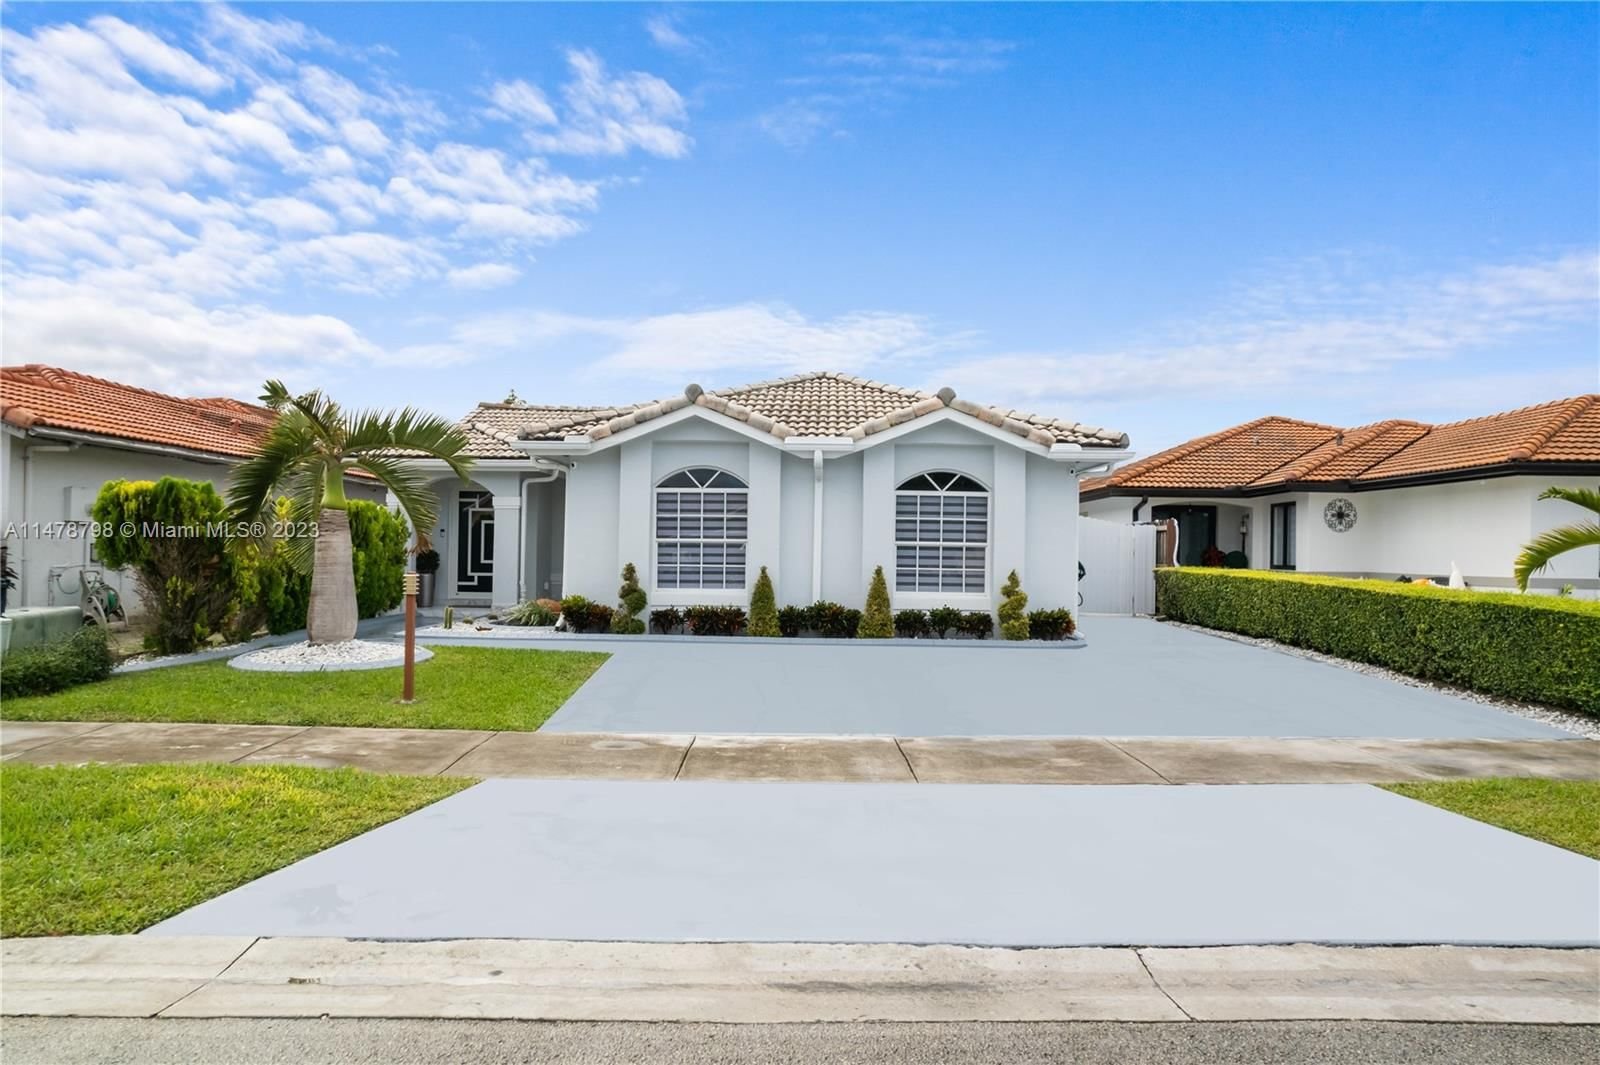 Real estate property located at 13800 157th Ter, Miami-Dade County, Miami, FL